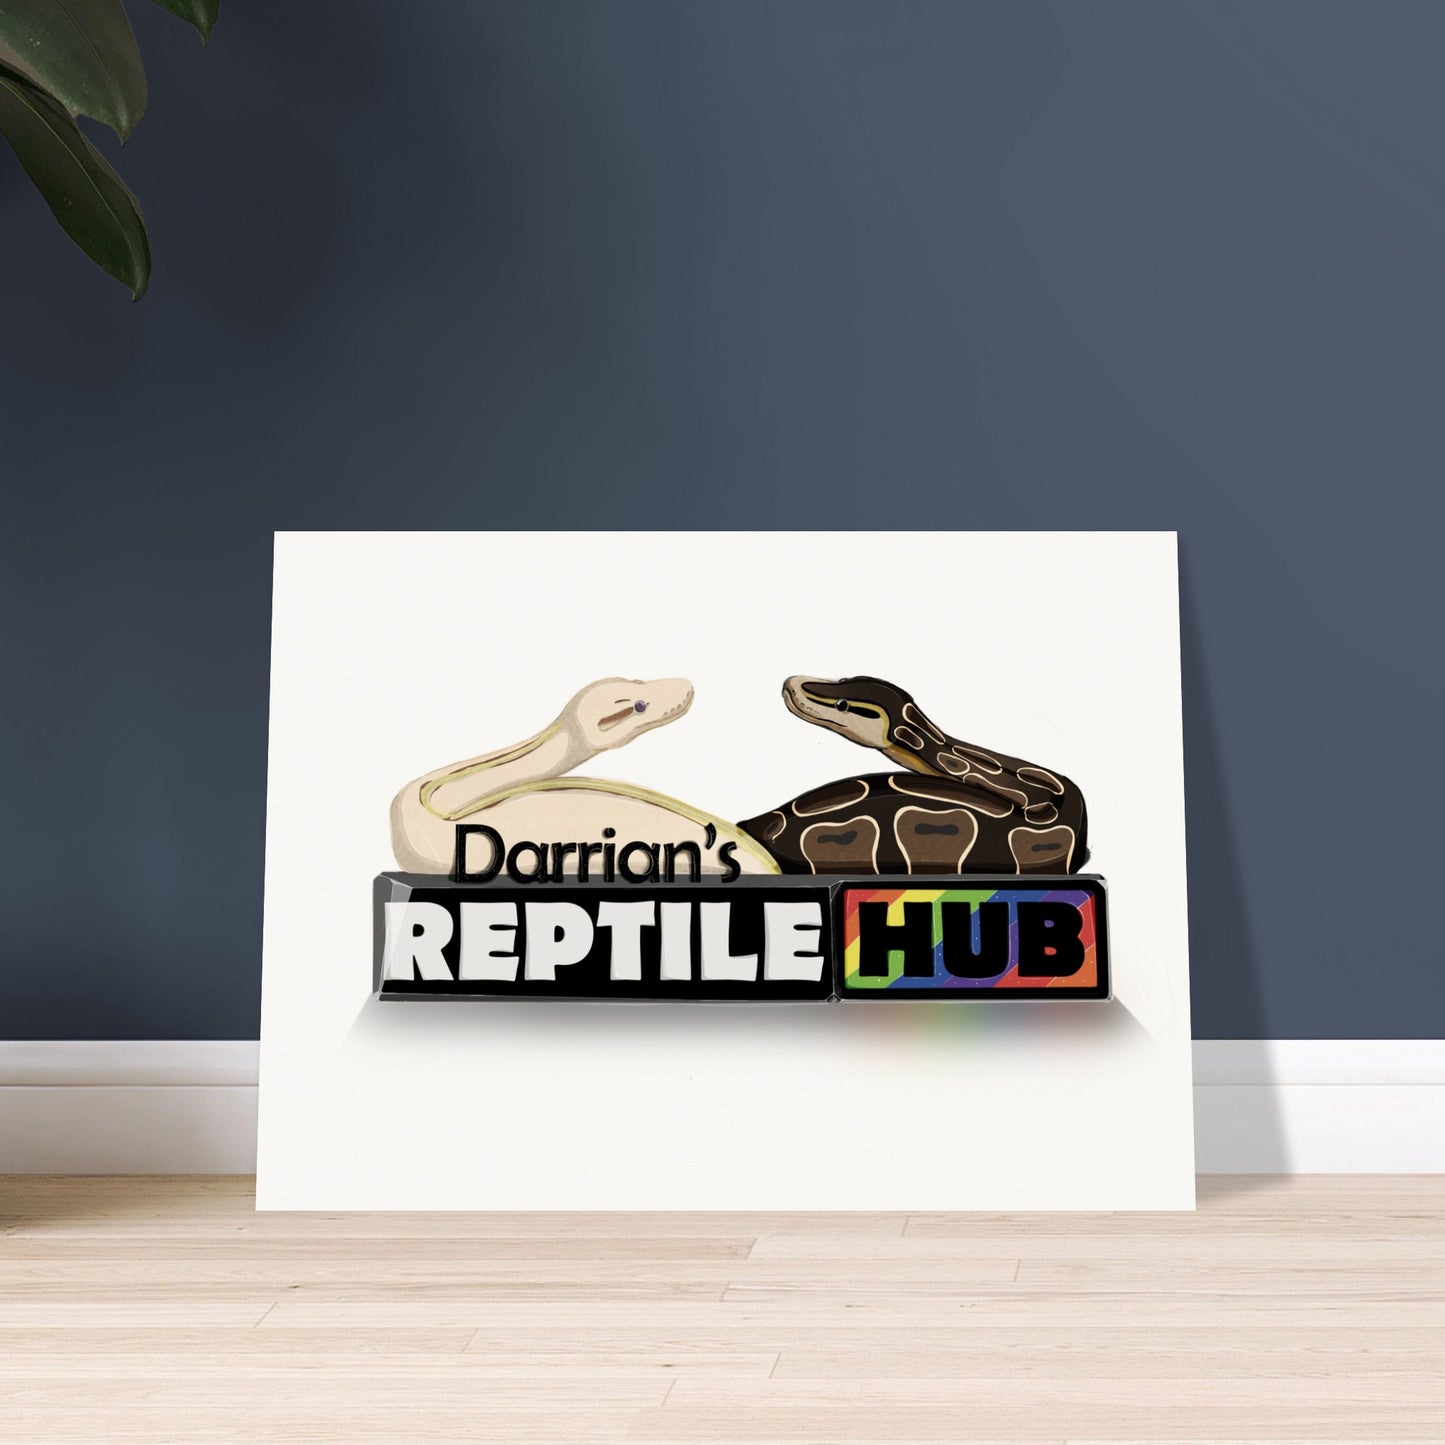 Darrian's Reptile Hub - Museum-Quality Matte Paper Poster